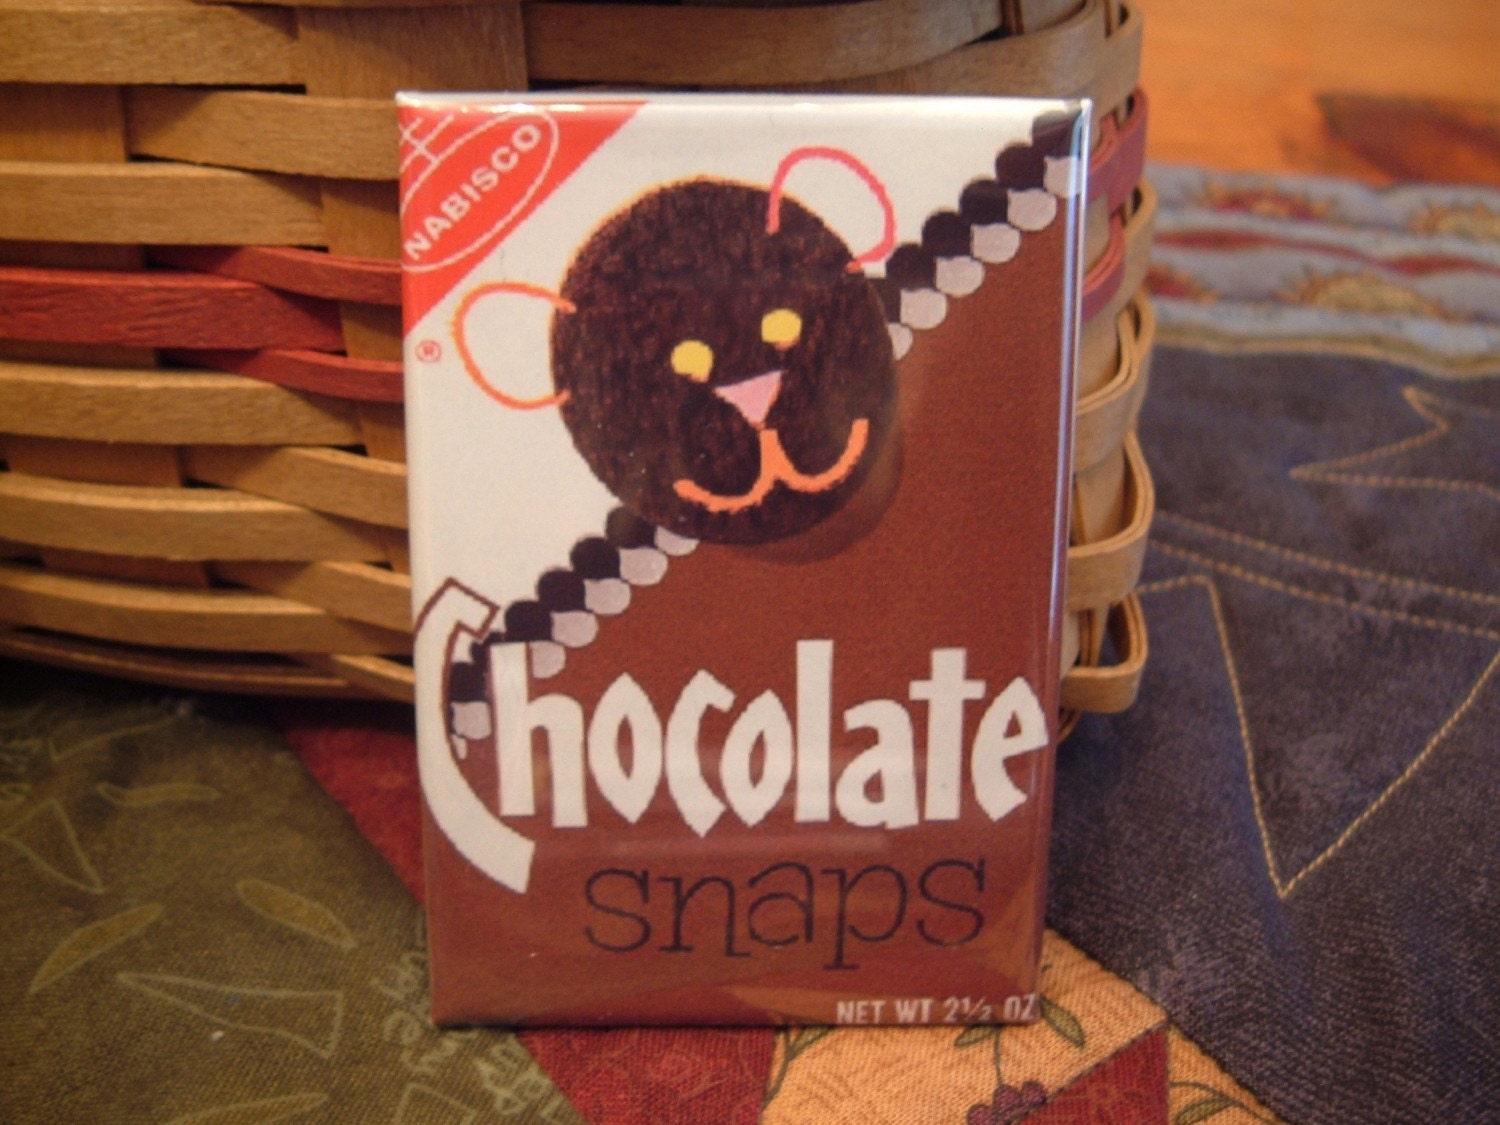 Chocolate Snaps